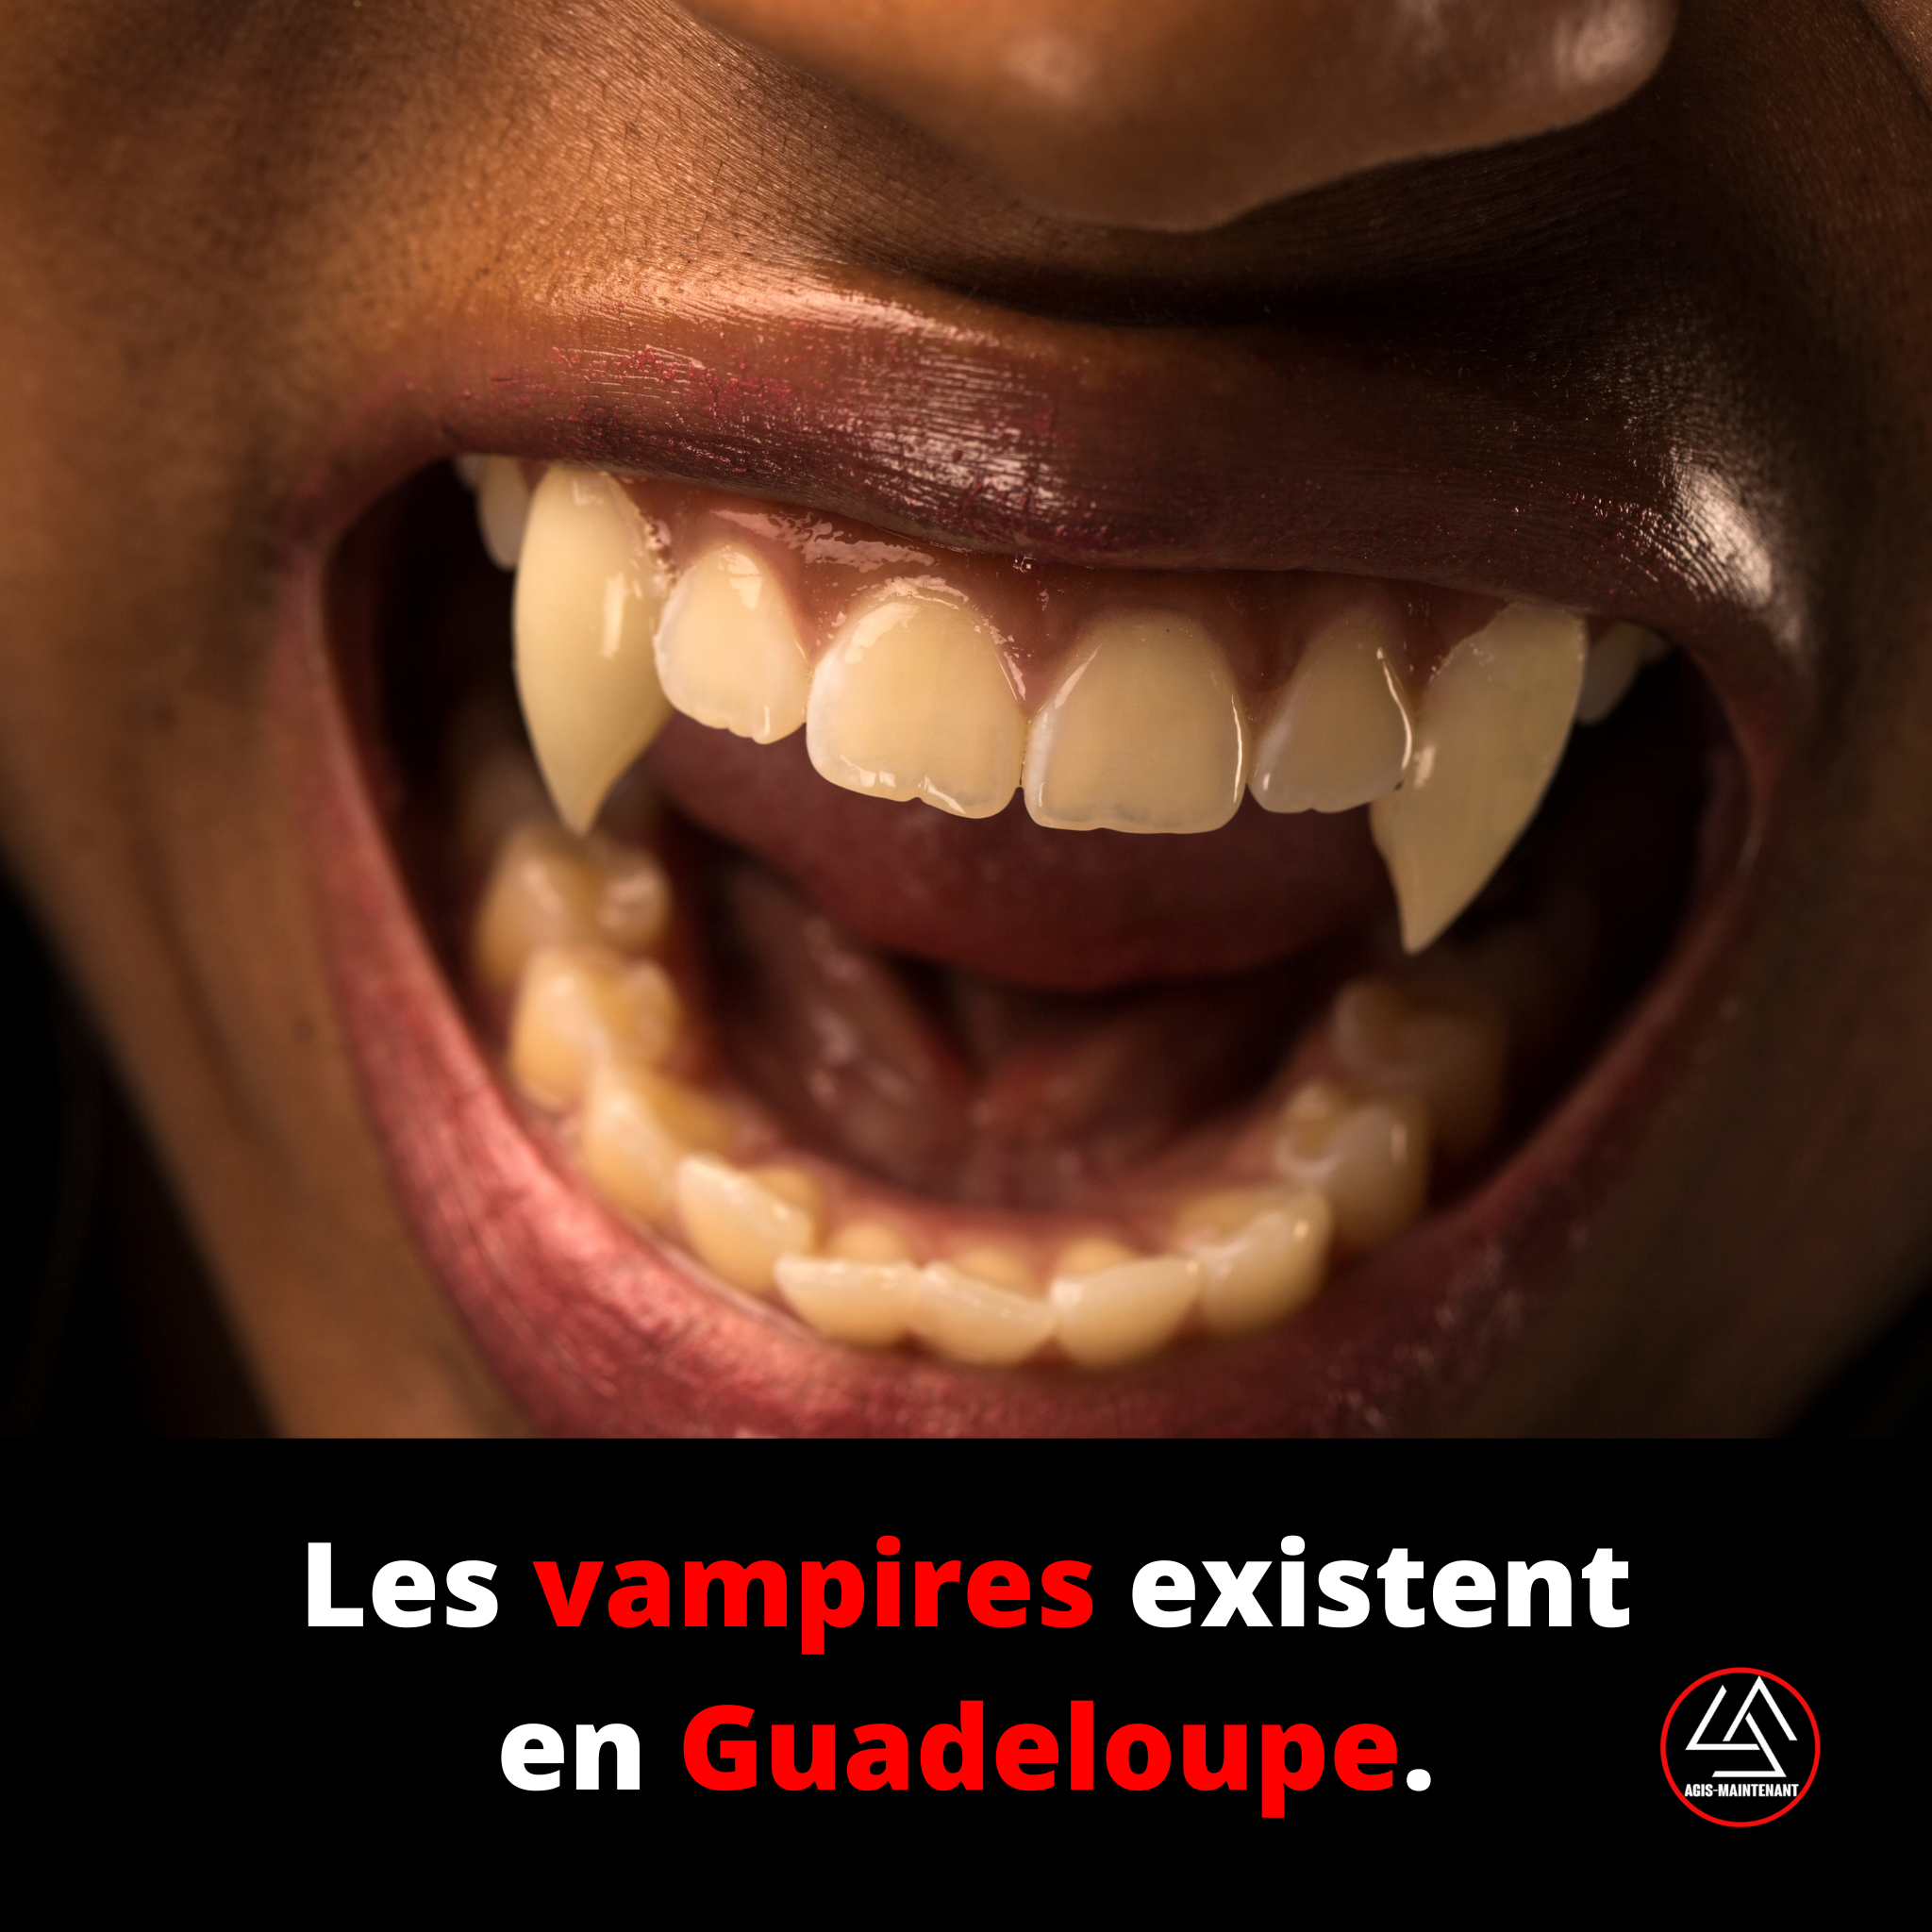 Les vampires existent en Guadeloupe.